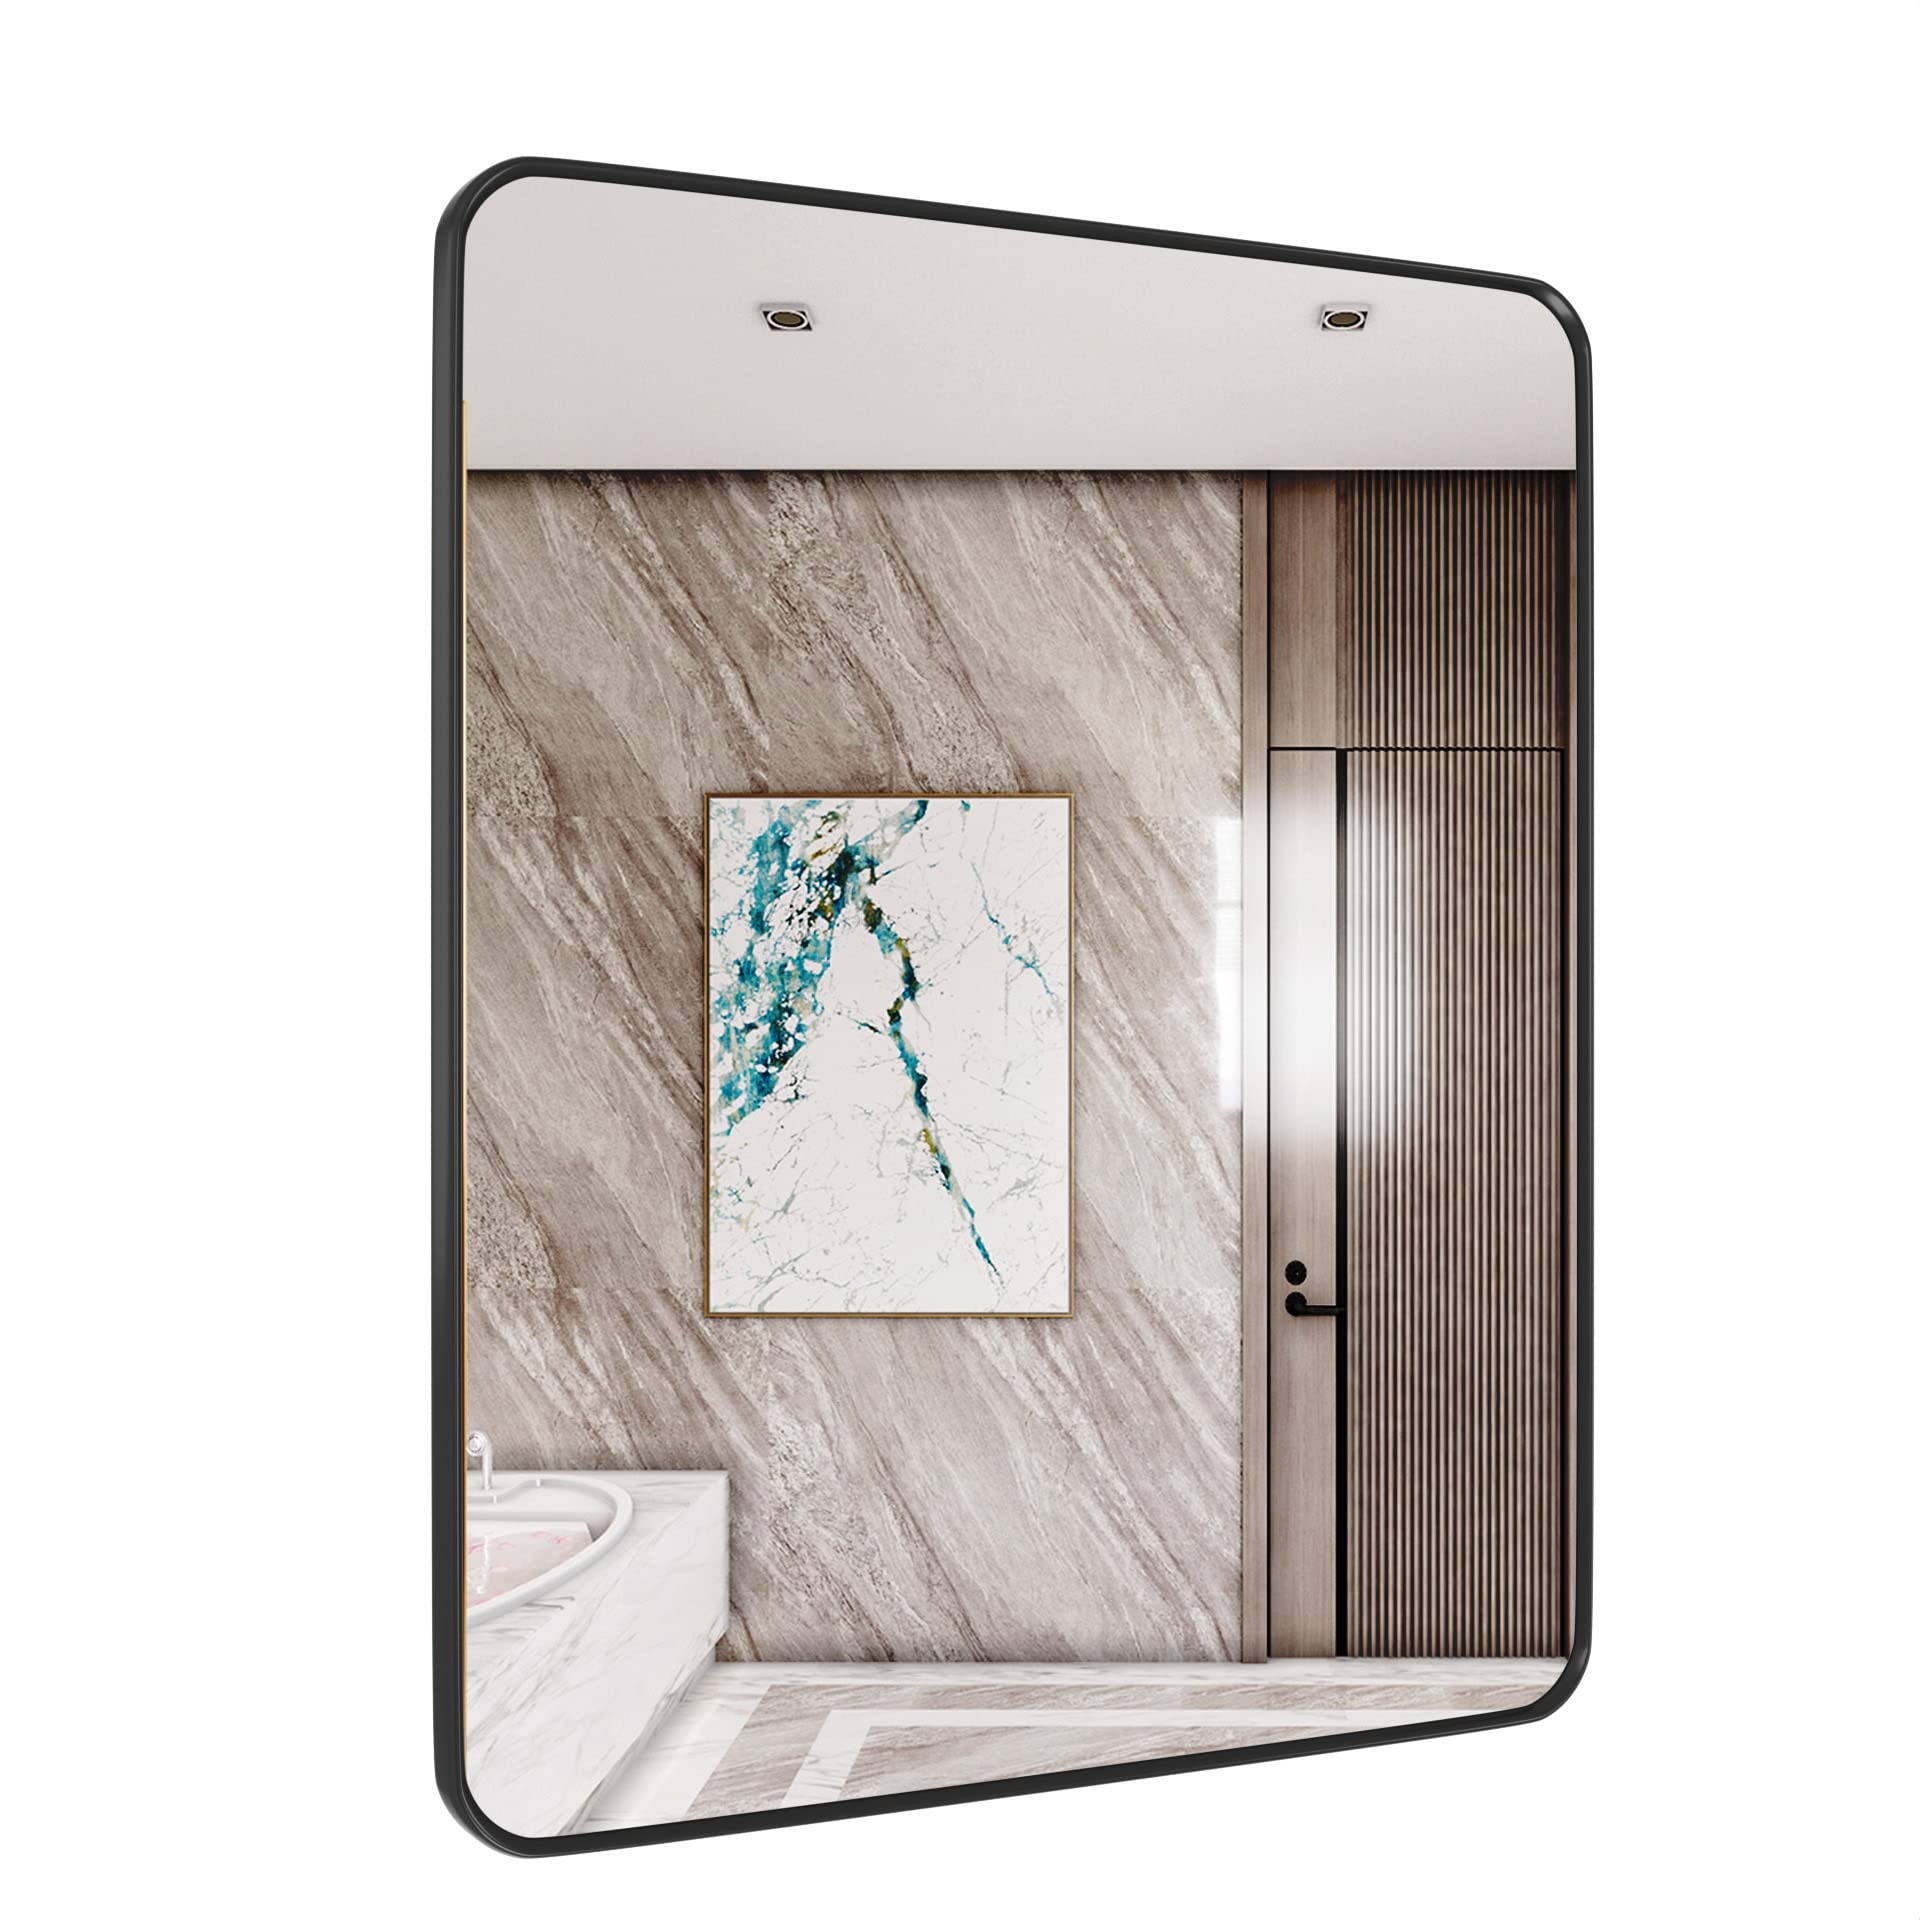 SNUGACE Black Vanity Mirror for Bathroom, Rectangle Frame Bathroom Wall Mounted Mirrors, 30x36 Inch